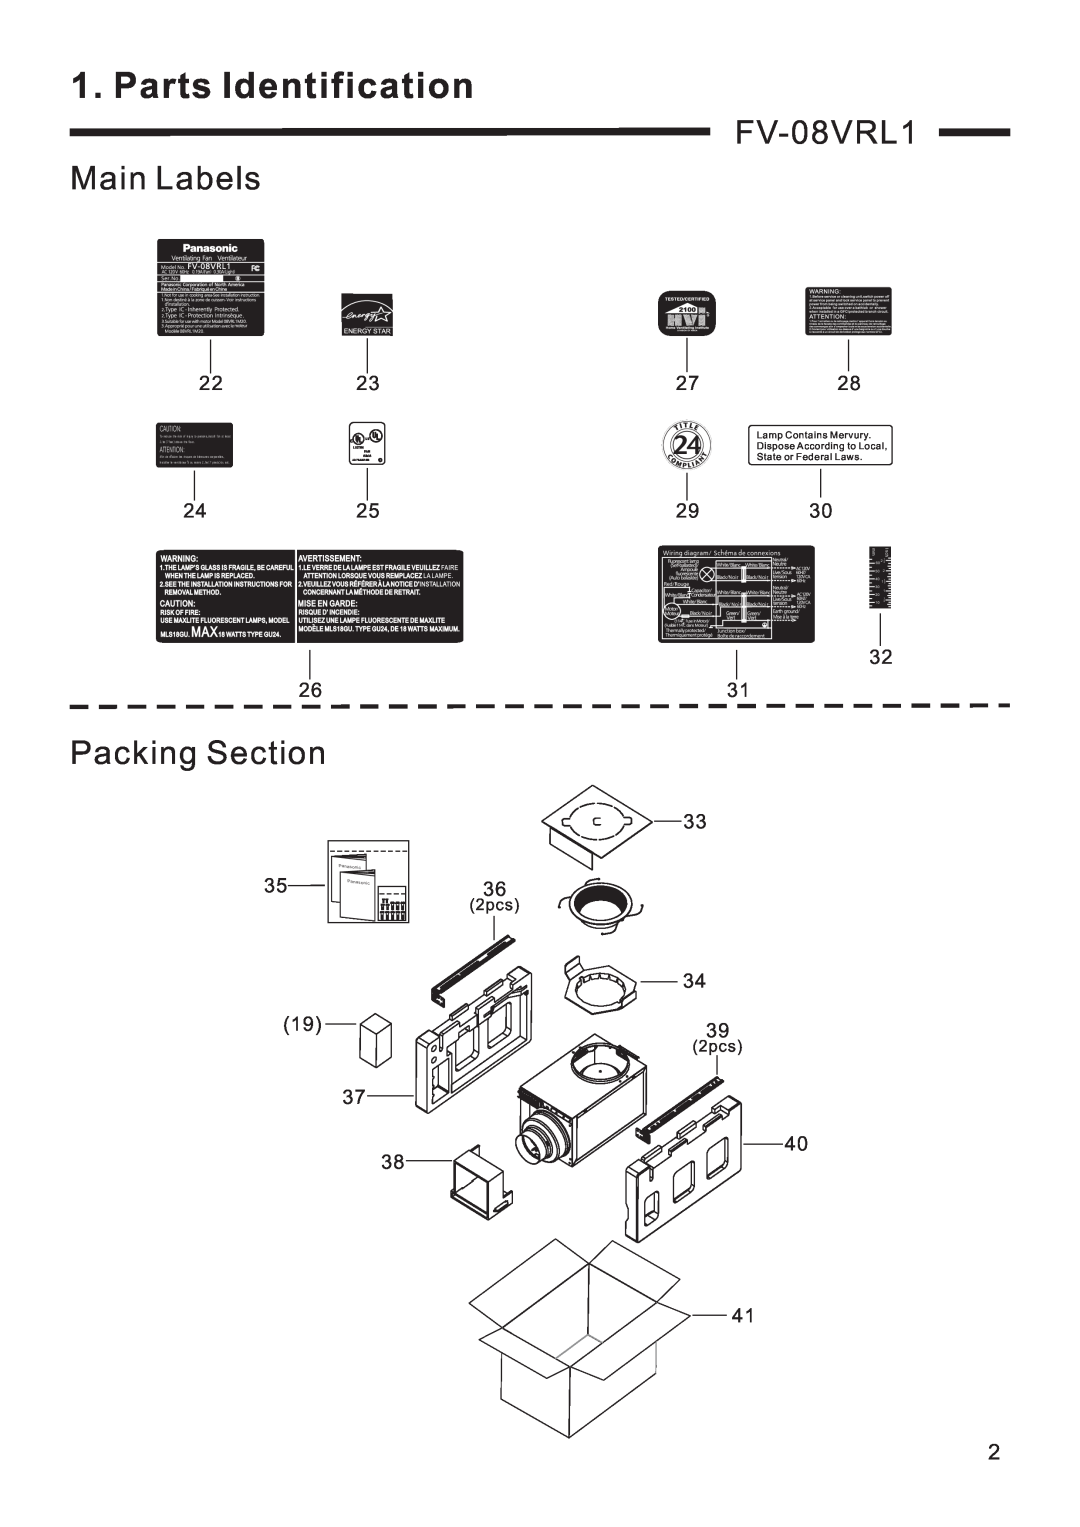 Panasonic service manual FV-08VRL1 Main Labels, Packing Section, Parts Identification, US LISTEN FAN 8B68 